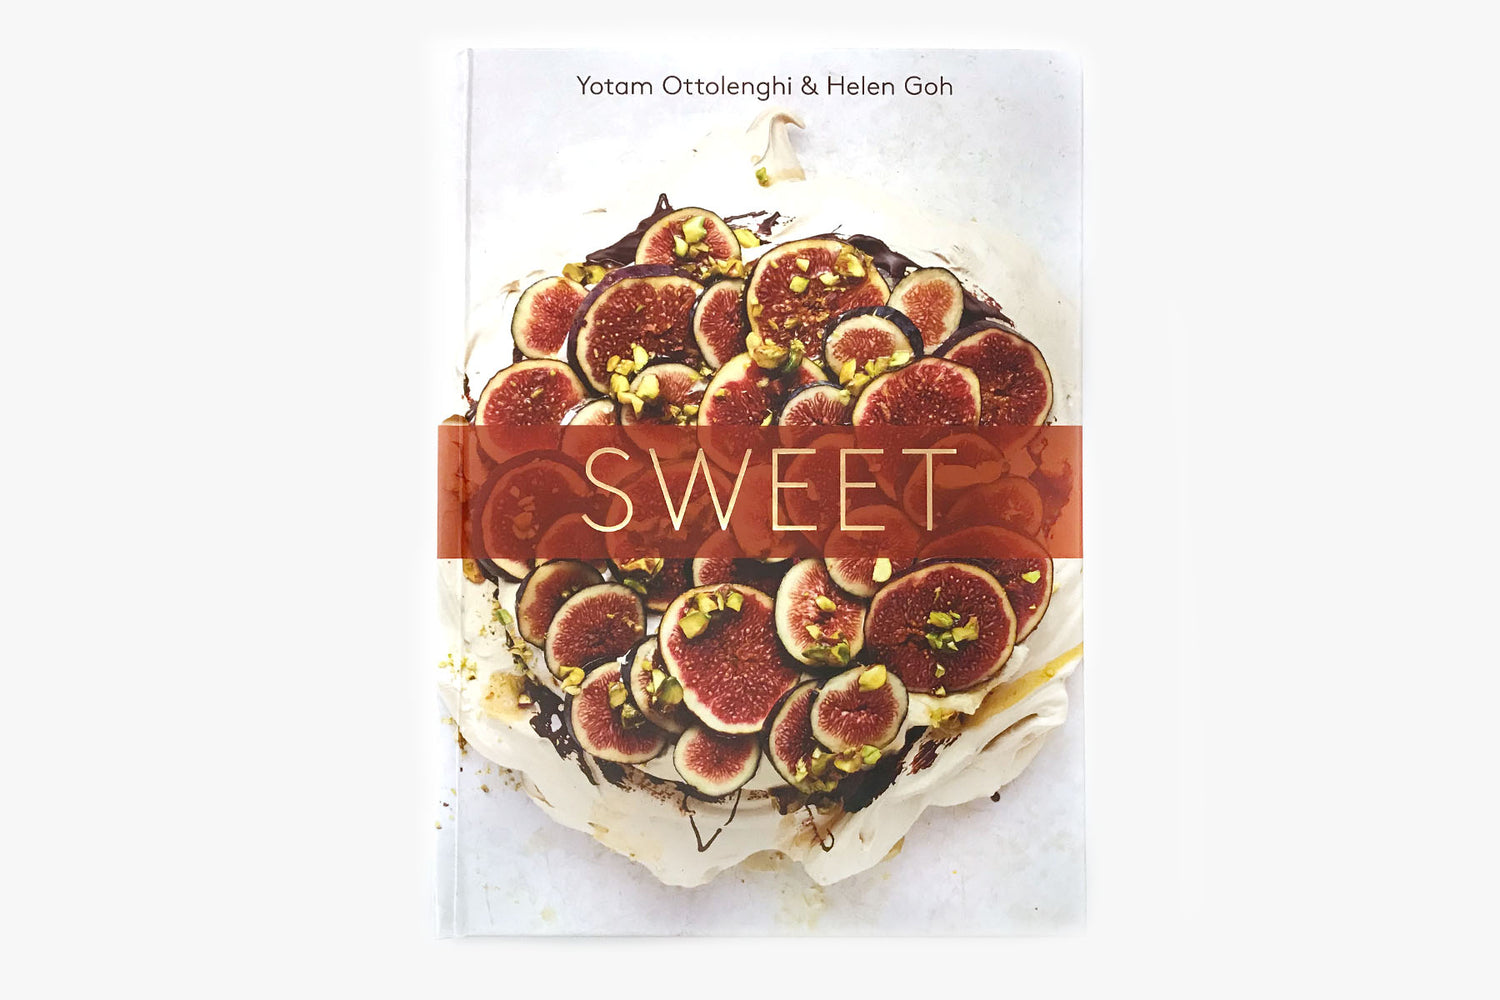 Sweet by Yotam Ottolenghi & Helen Goh